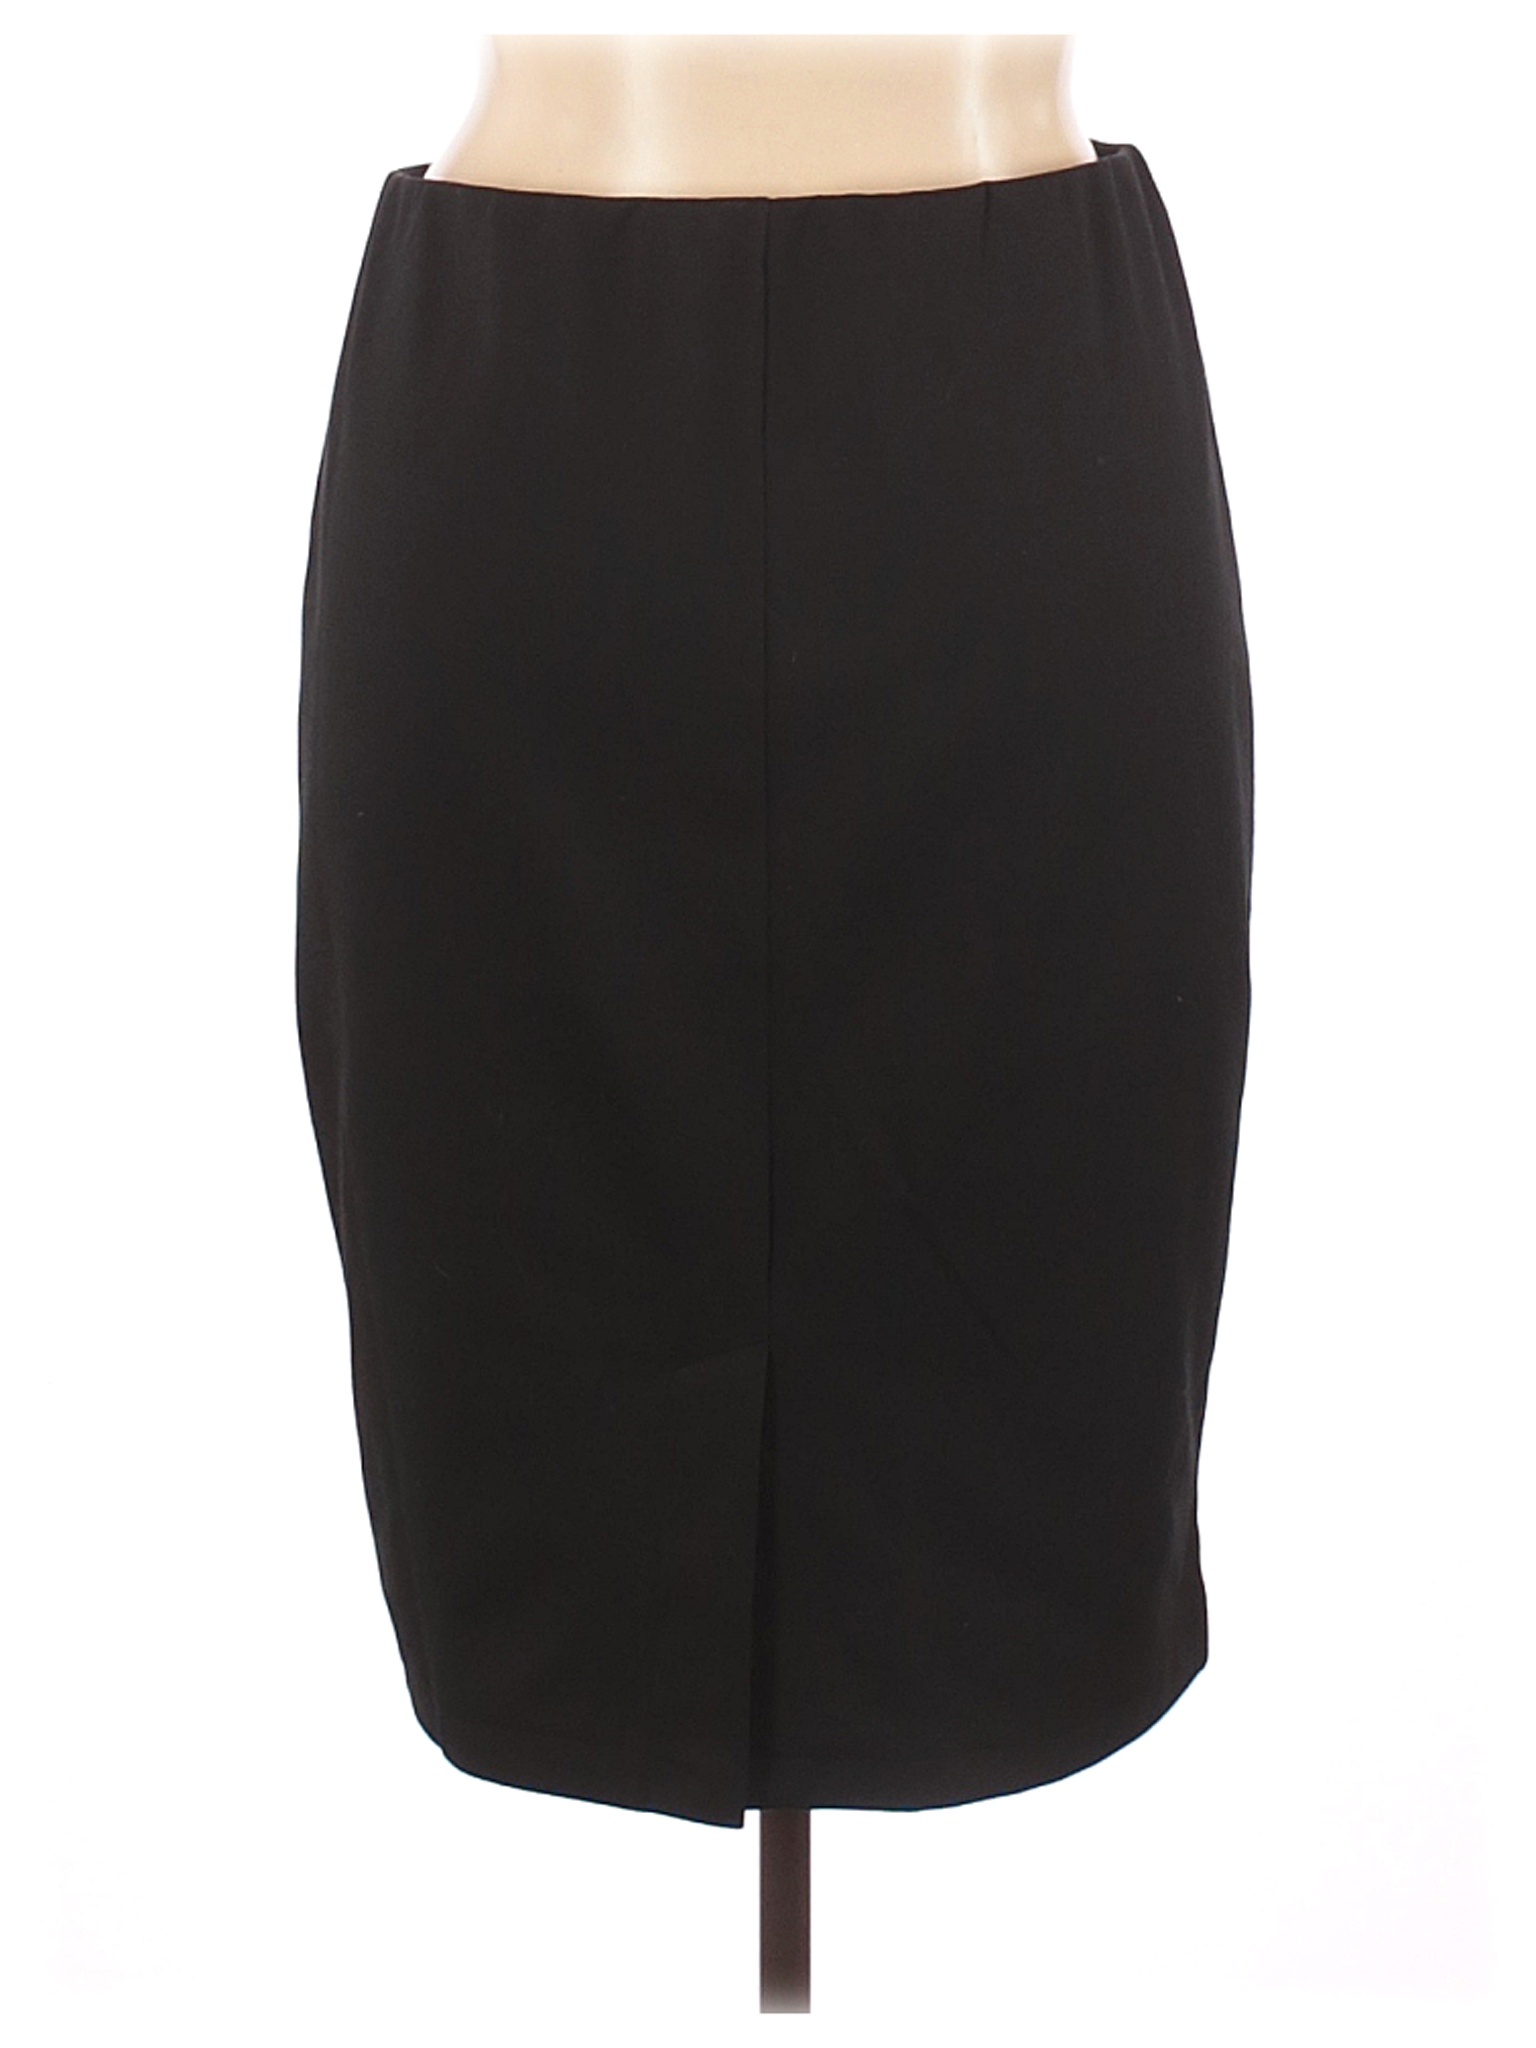 Mossimo Women Black Casual Skirt XL | eBay